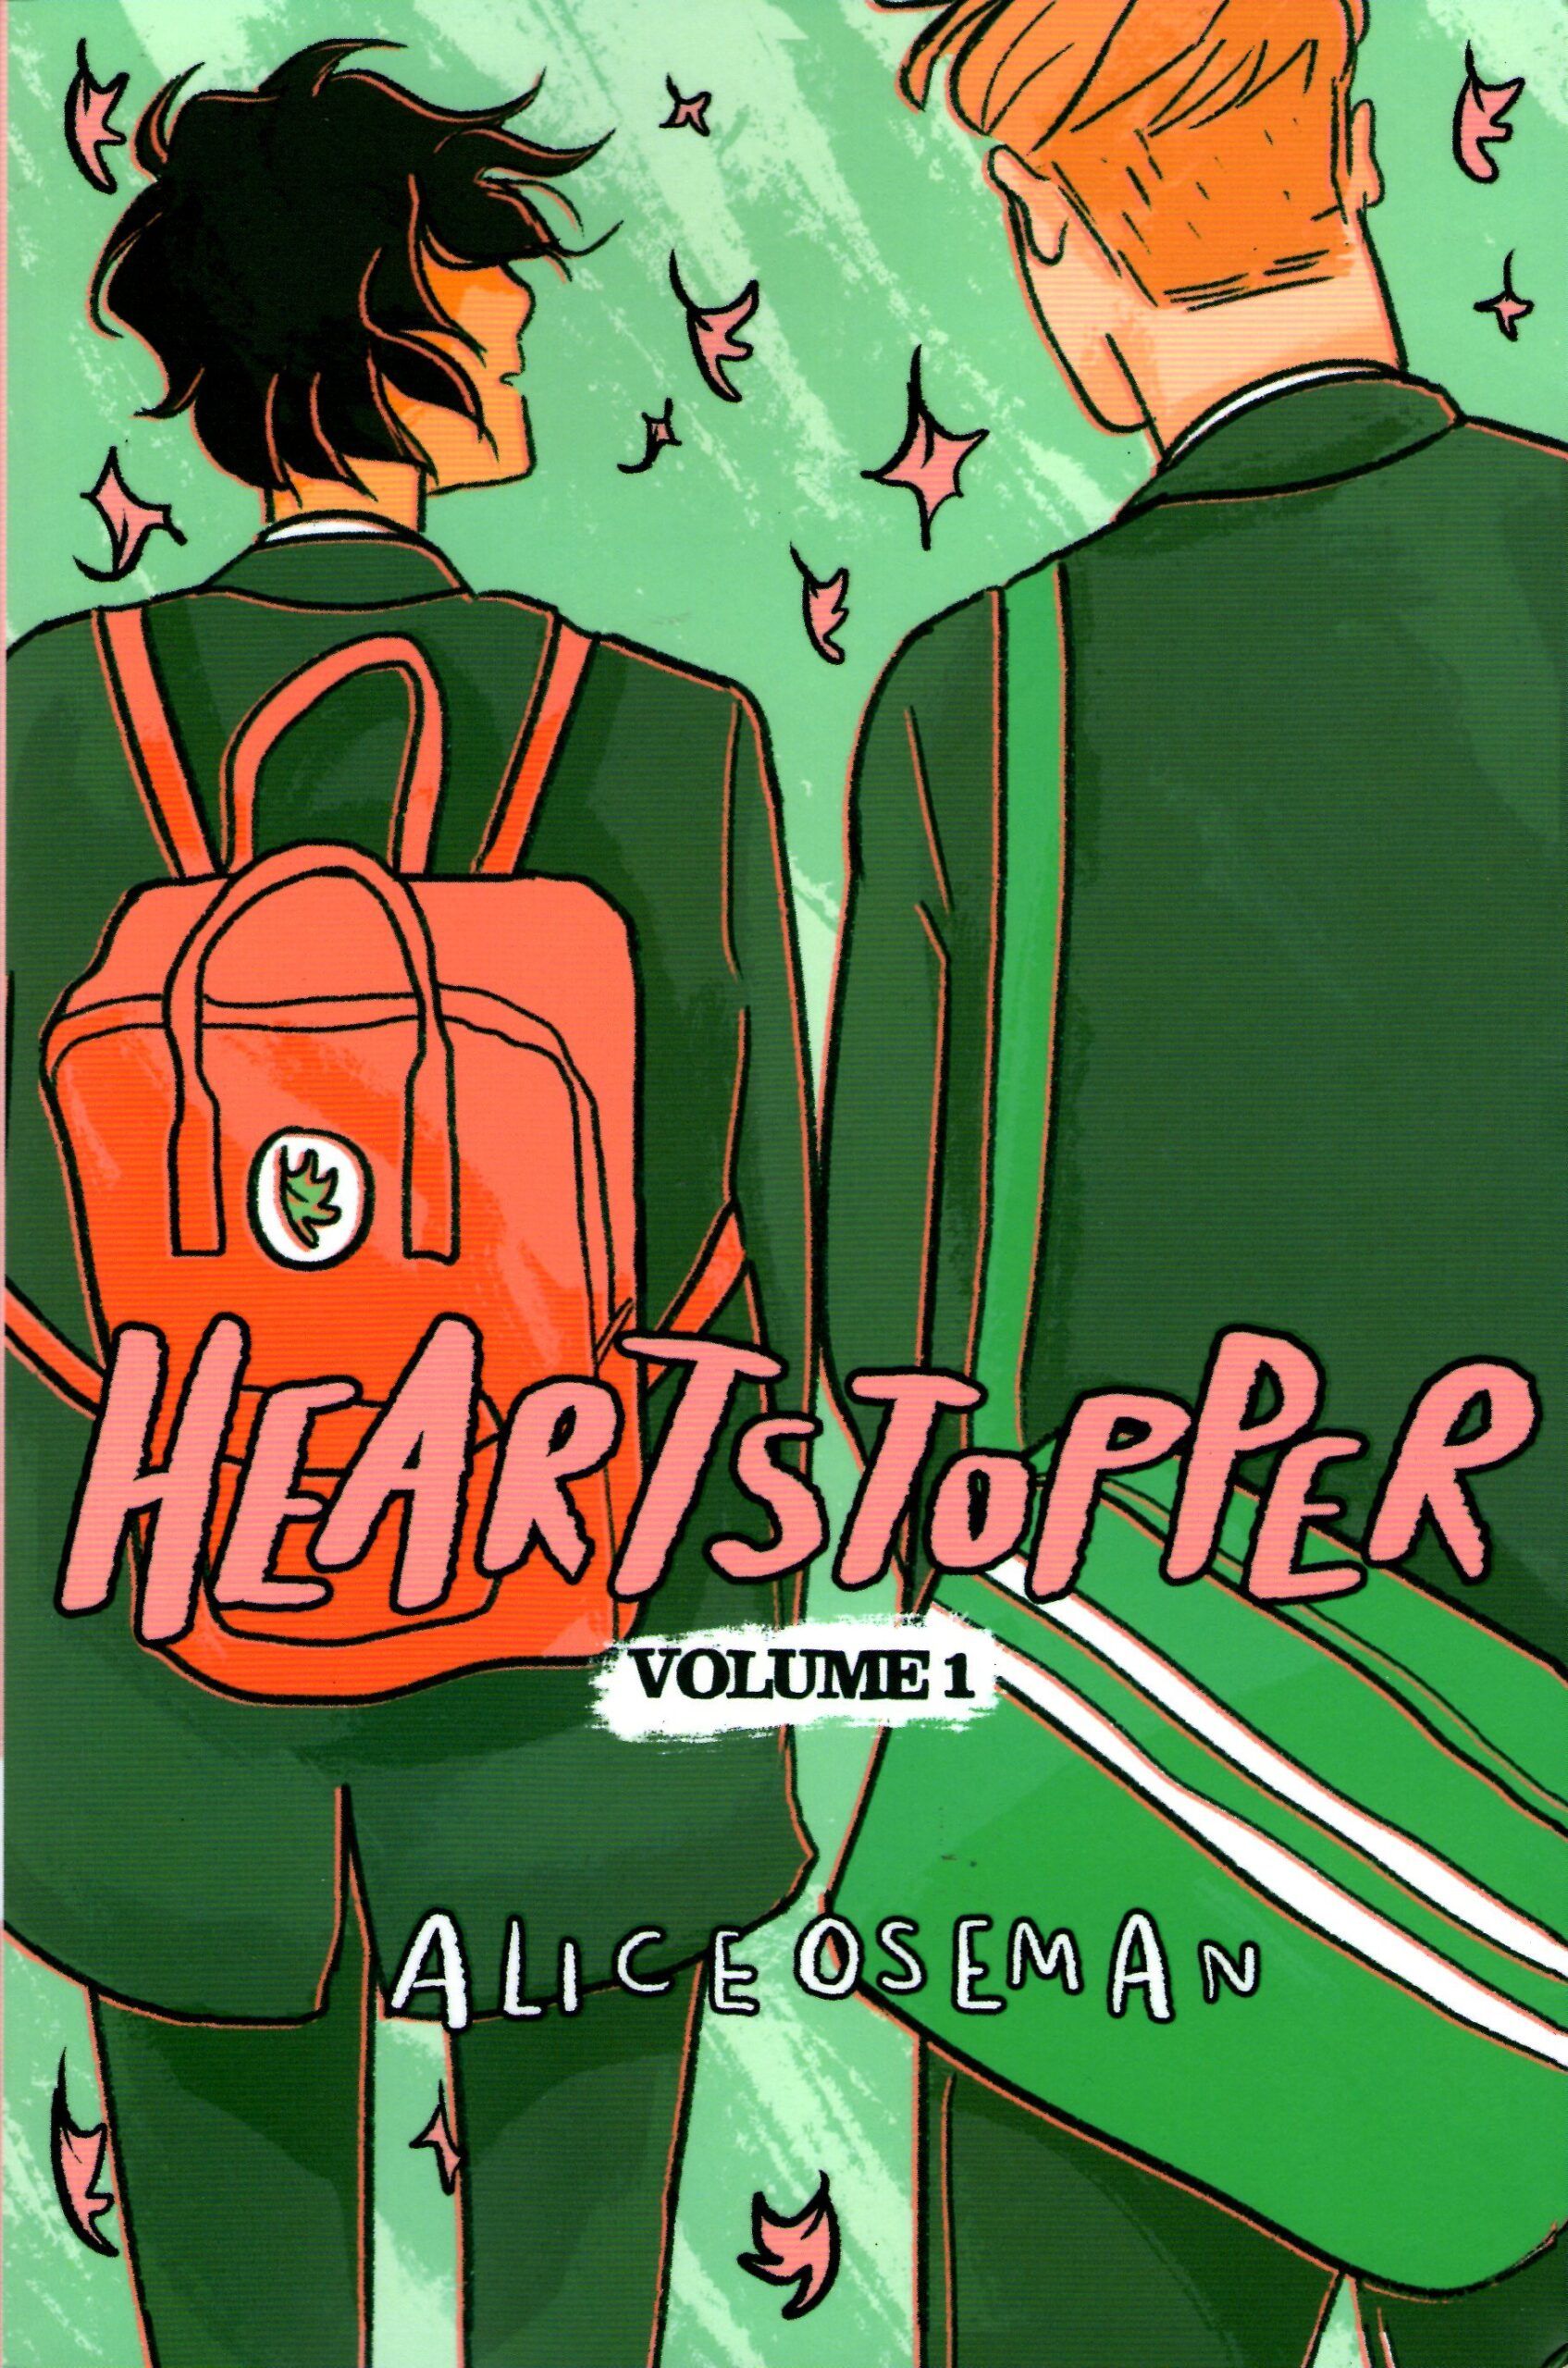 heartstopper book cover